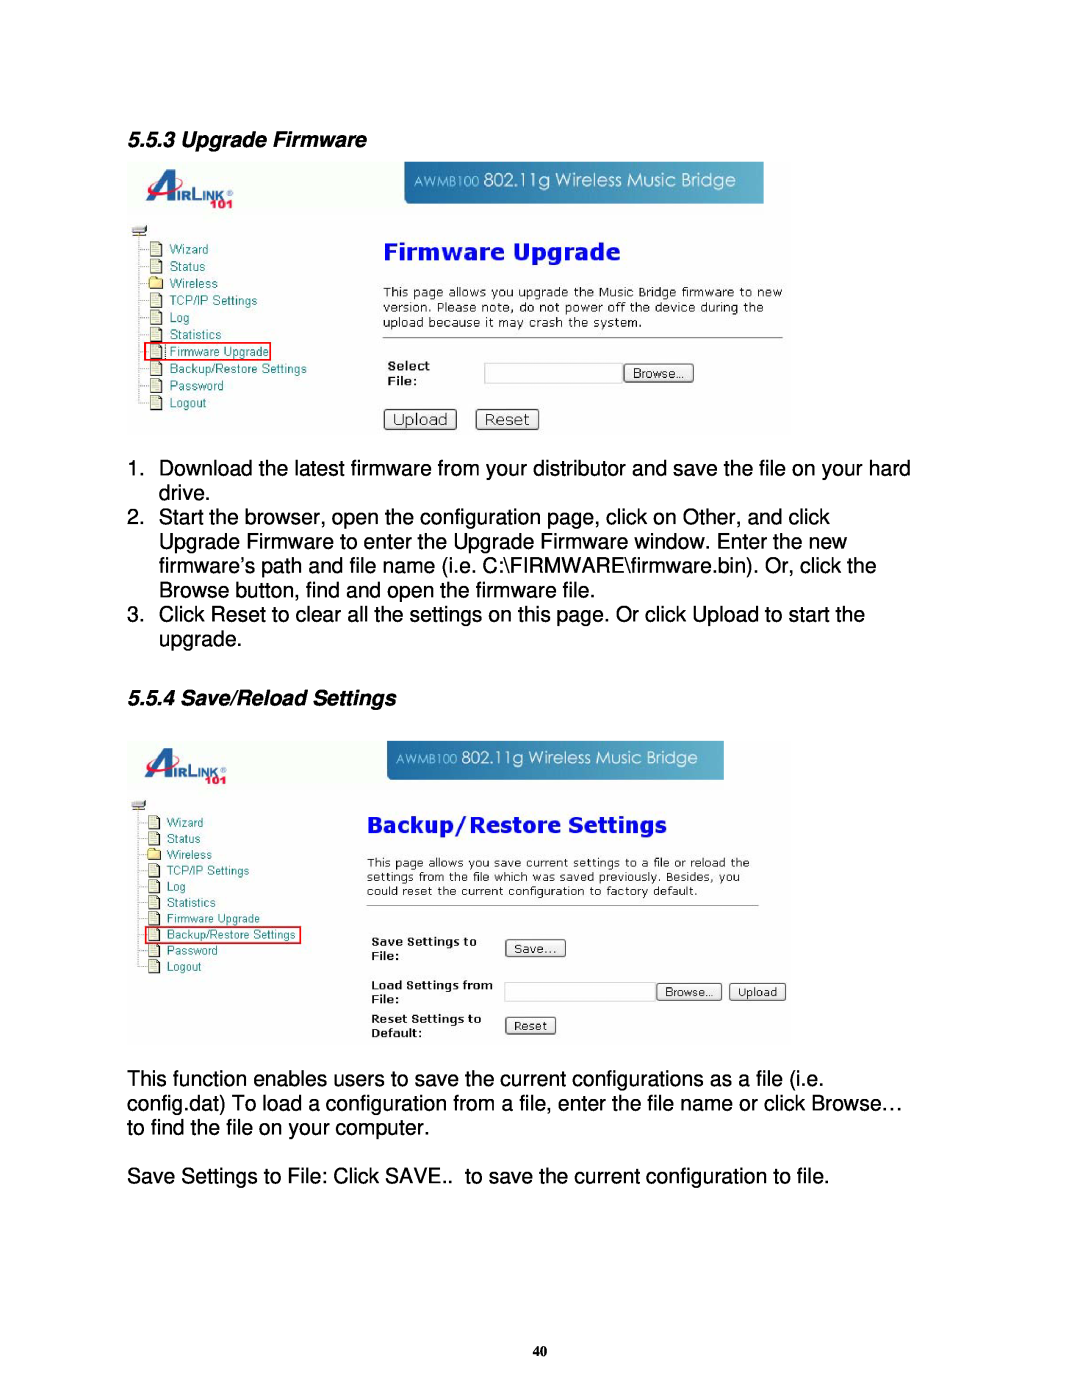 Airlink101 AWMB100 manual Upgrade Firmware, Save/Reload Settings 